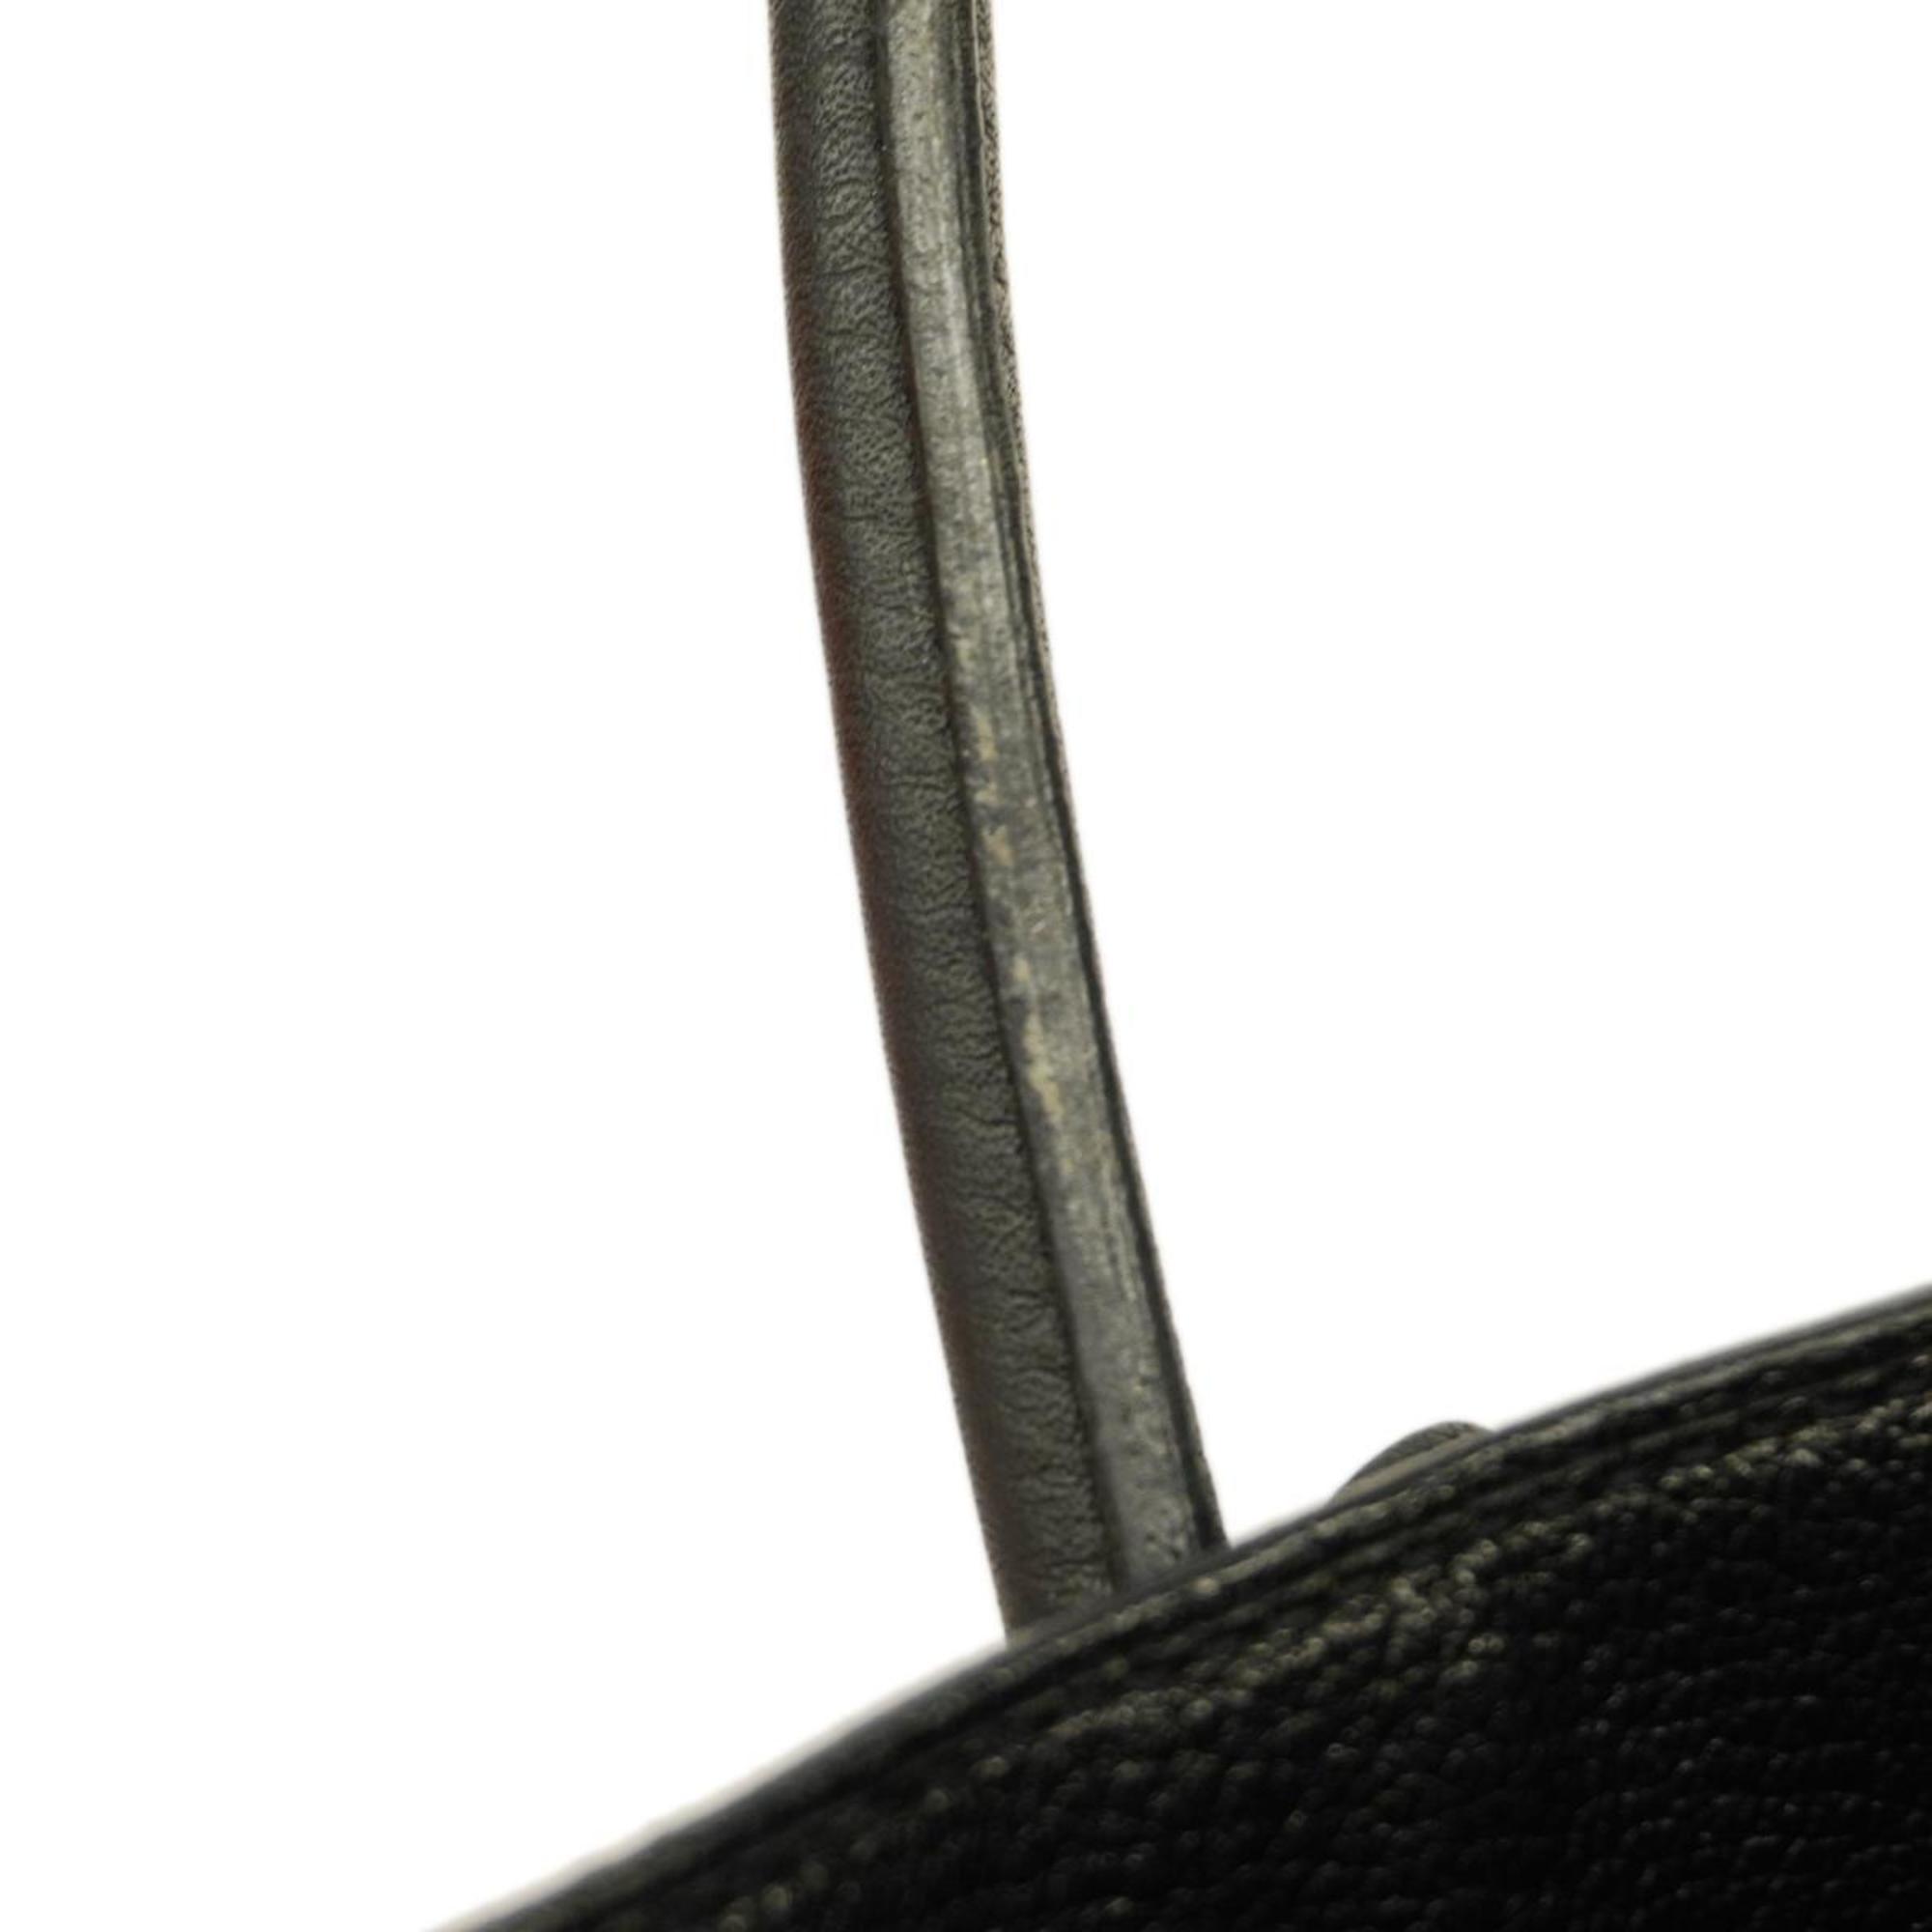 Hermes handbag Birkin 30 □K engraved Taurillon Clemence black ladies